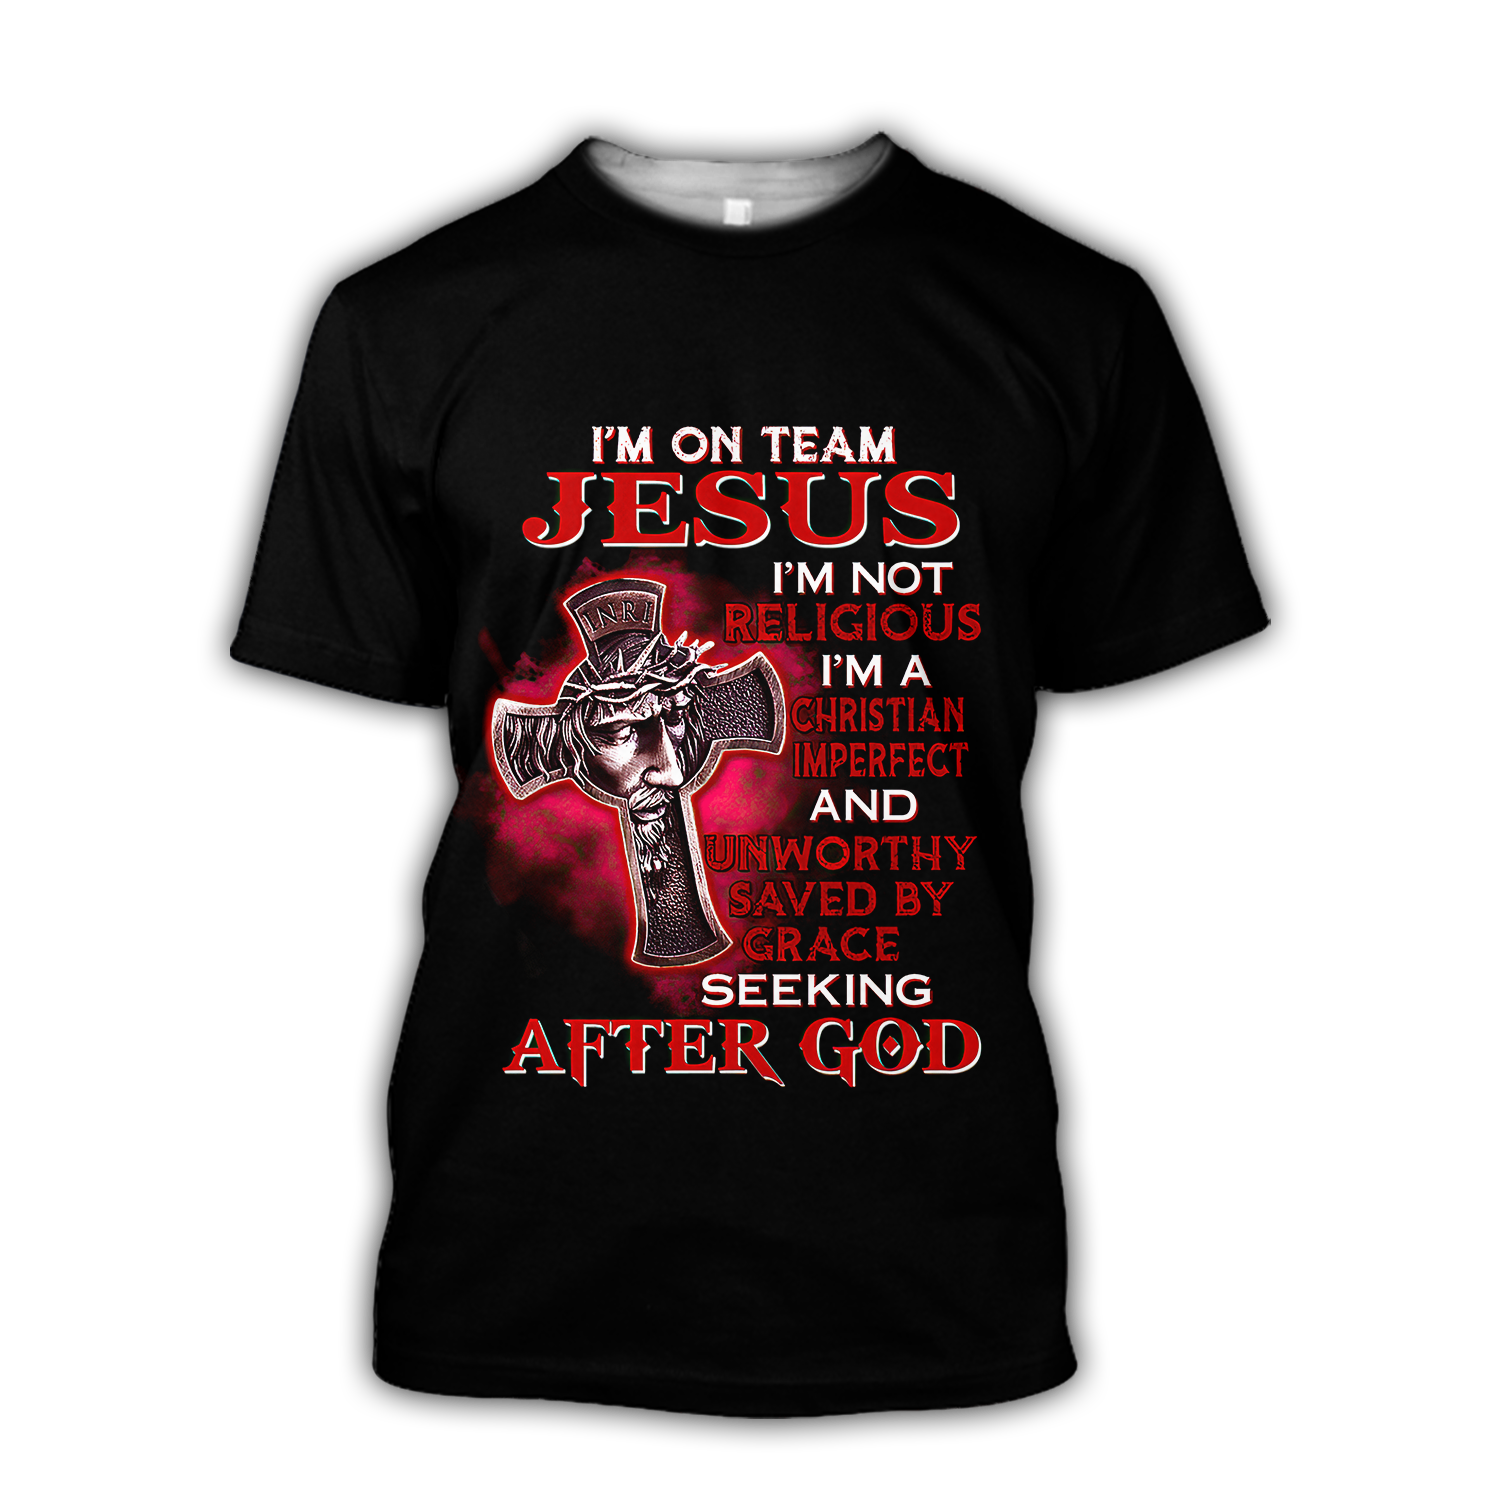 I'm on Team God - T-Shirt Style for Men and Women